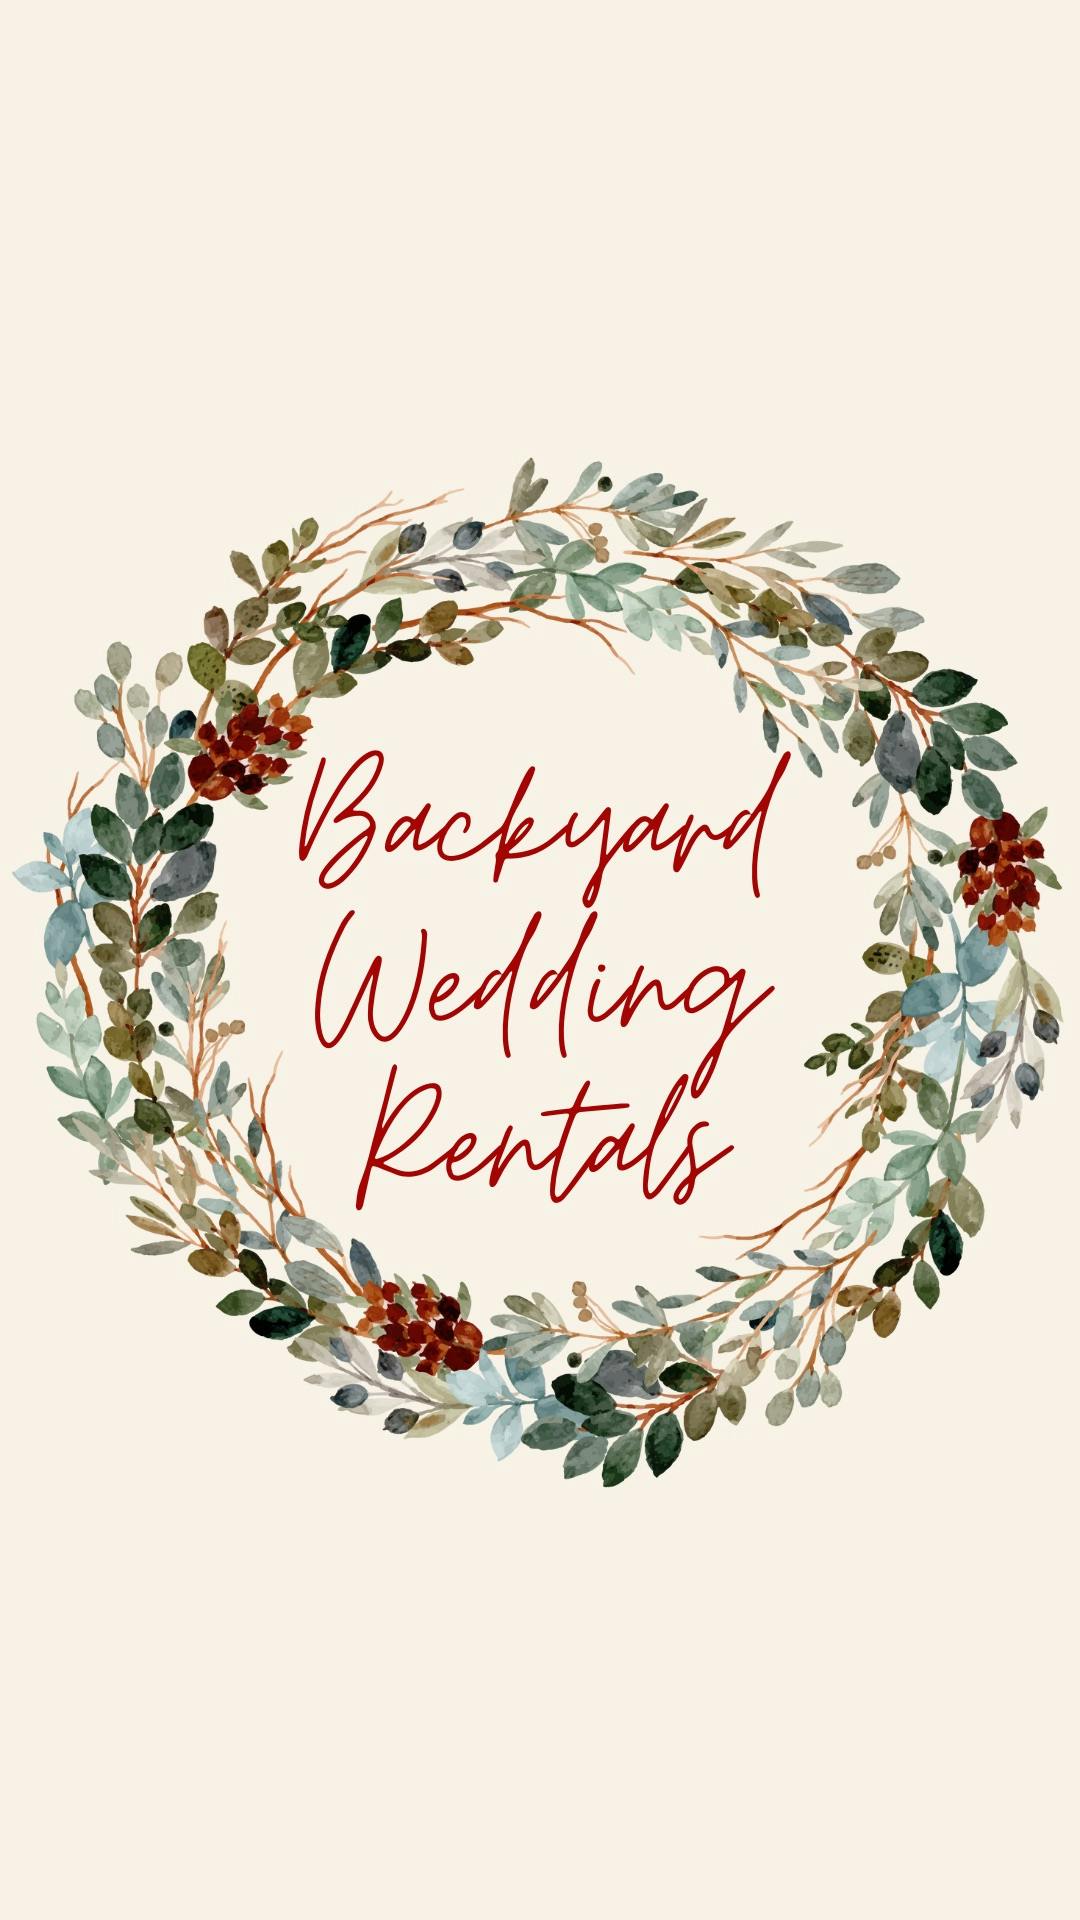 Martin Creek Backyard Wedding Weekend Rental